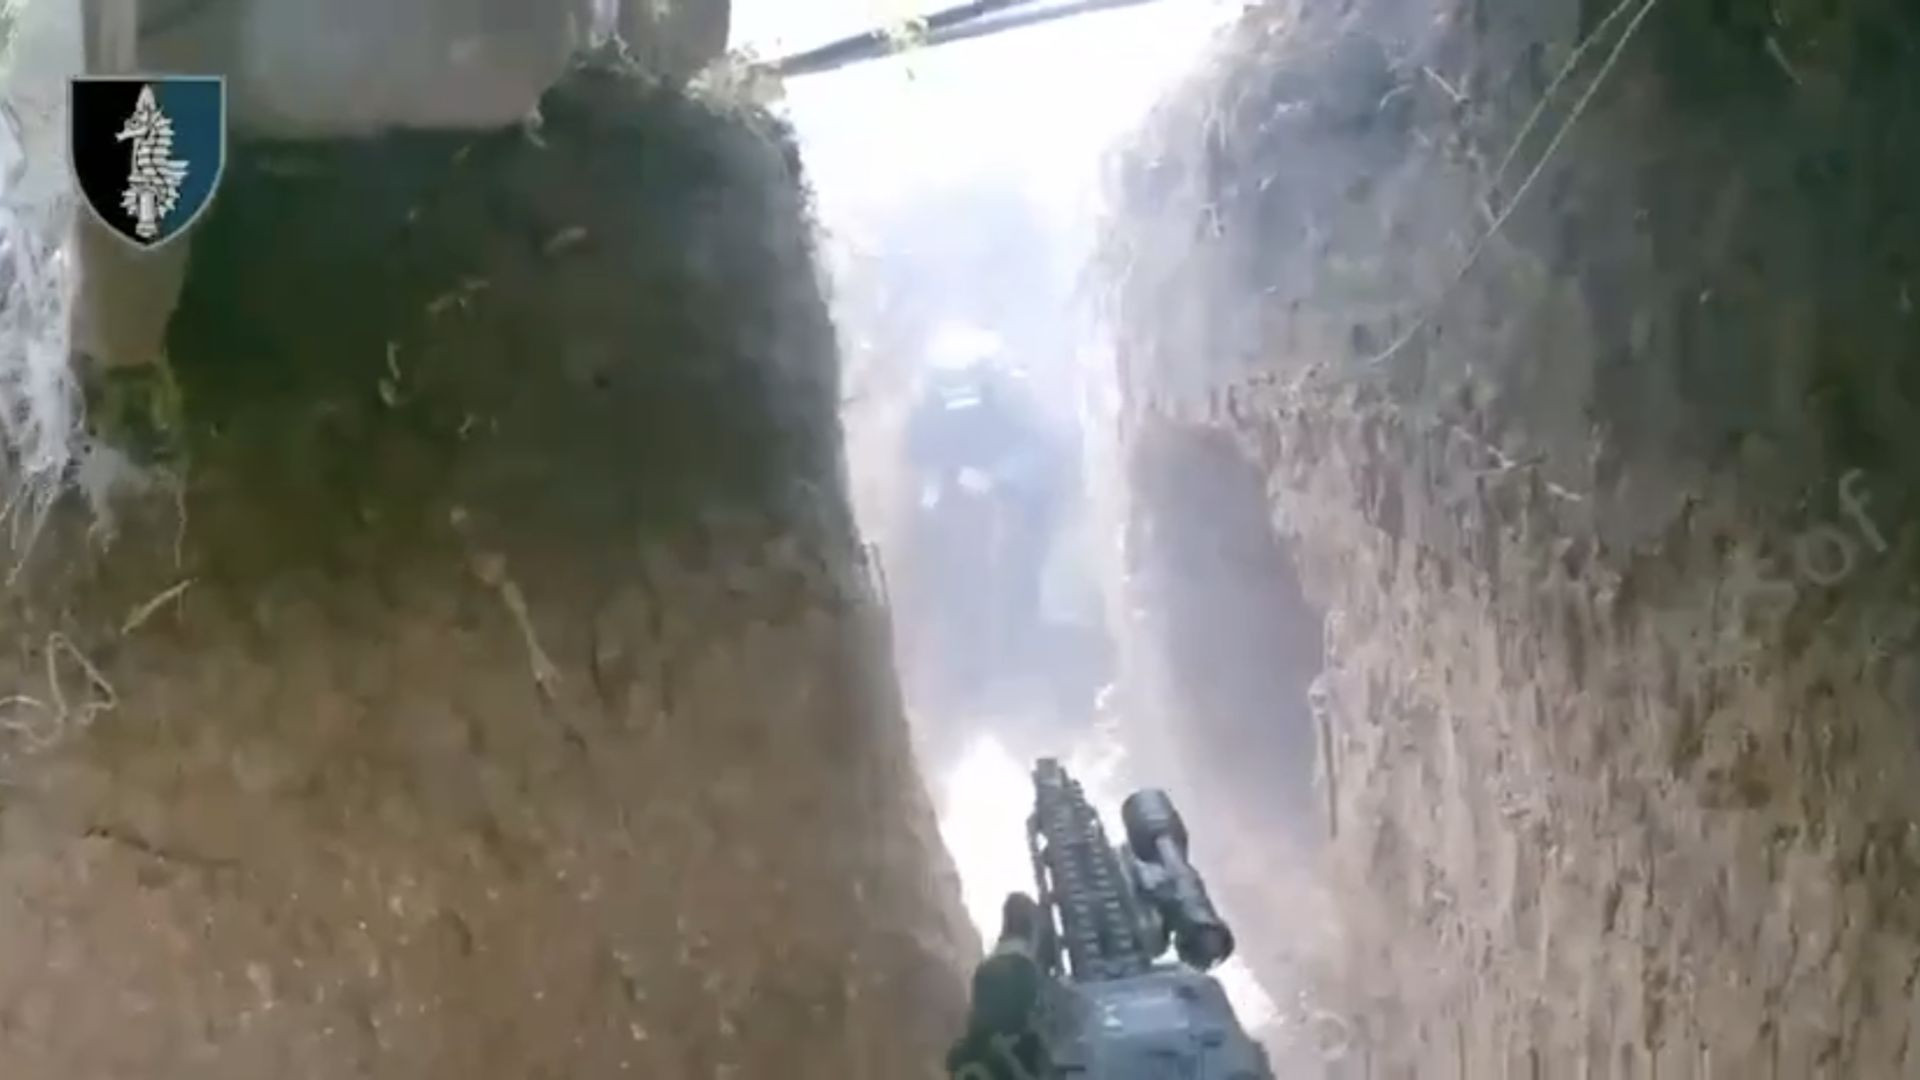 Ukraine combat footage - trench CLOSE QUARTERS battle ( where Semyon Pegov aka WarGonzo killed)